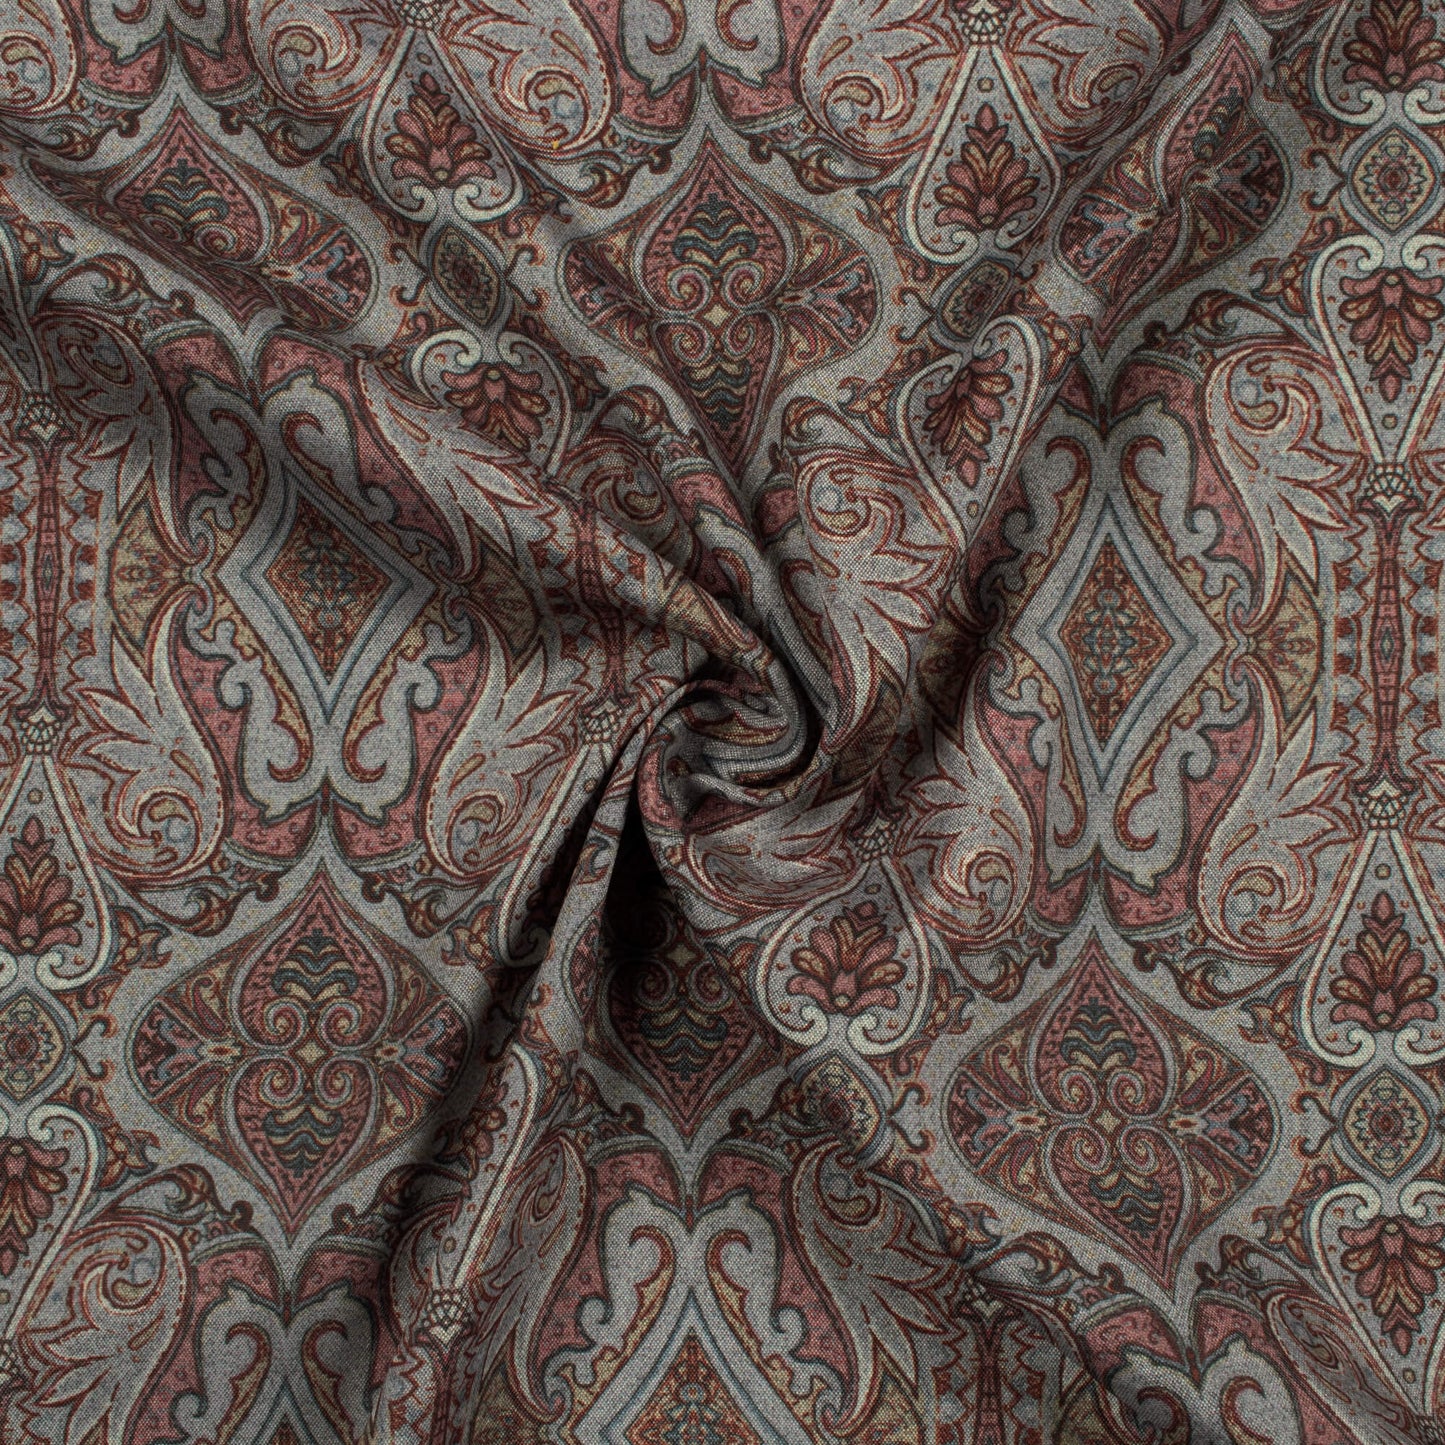 Dolphin Grey And Thulian Pink Ethnic Pattern Digital Print Crepe Silk Fabric